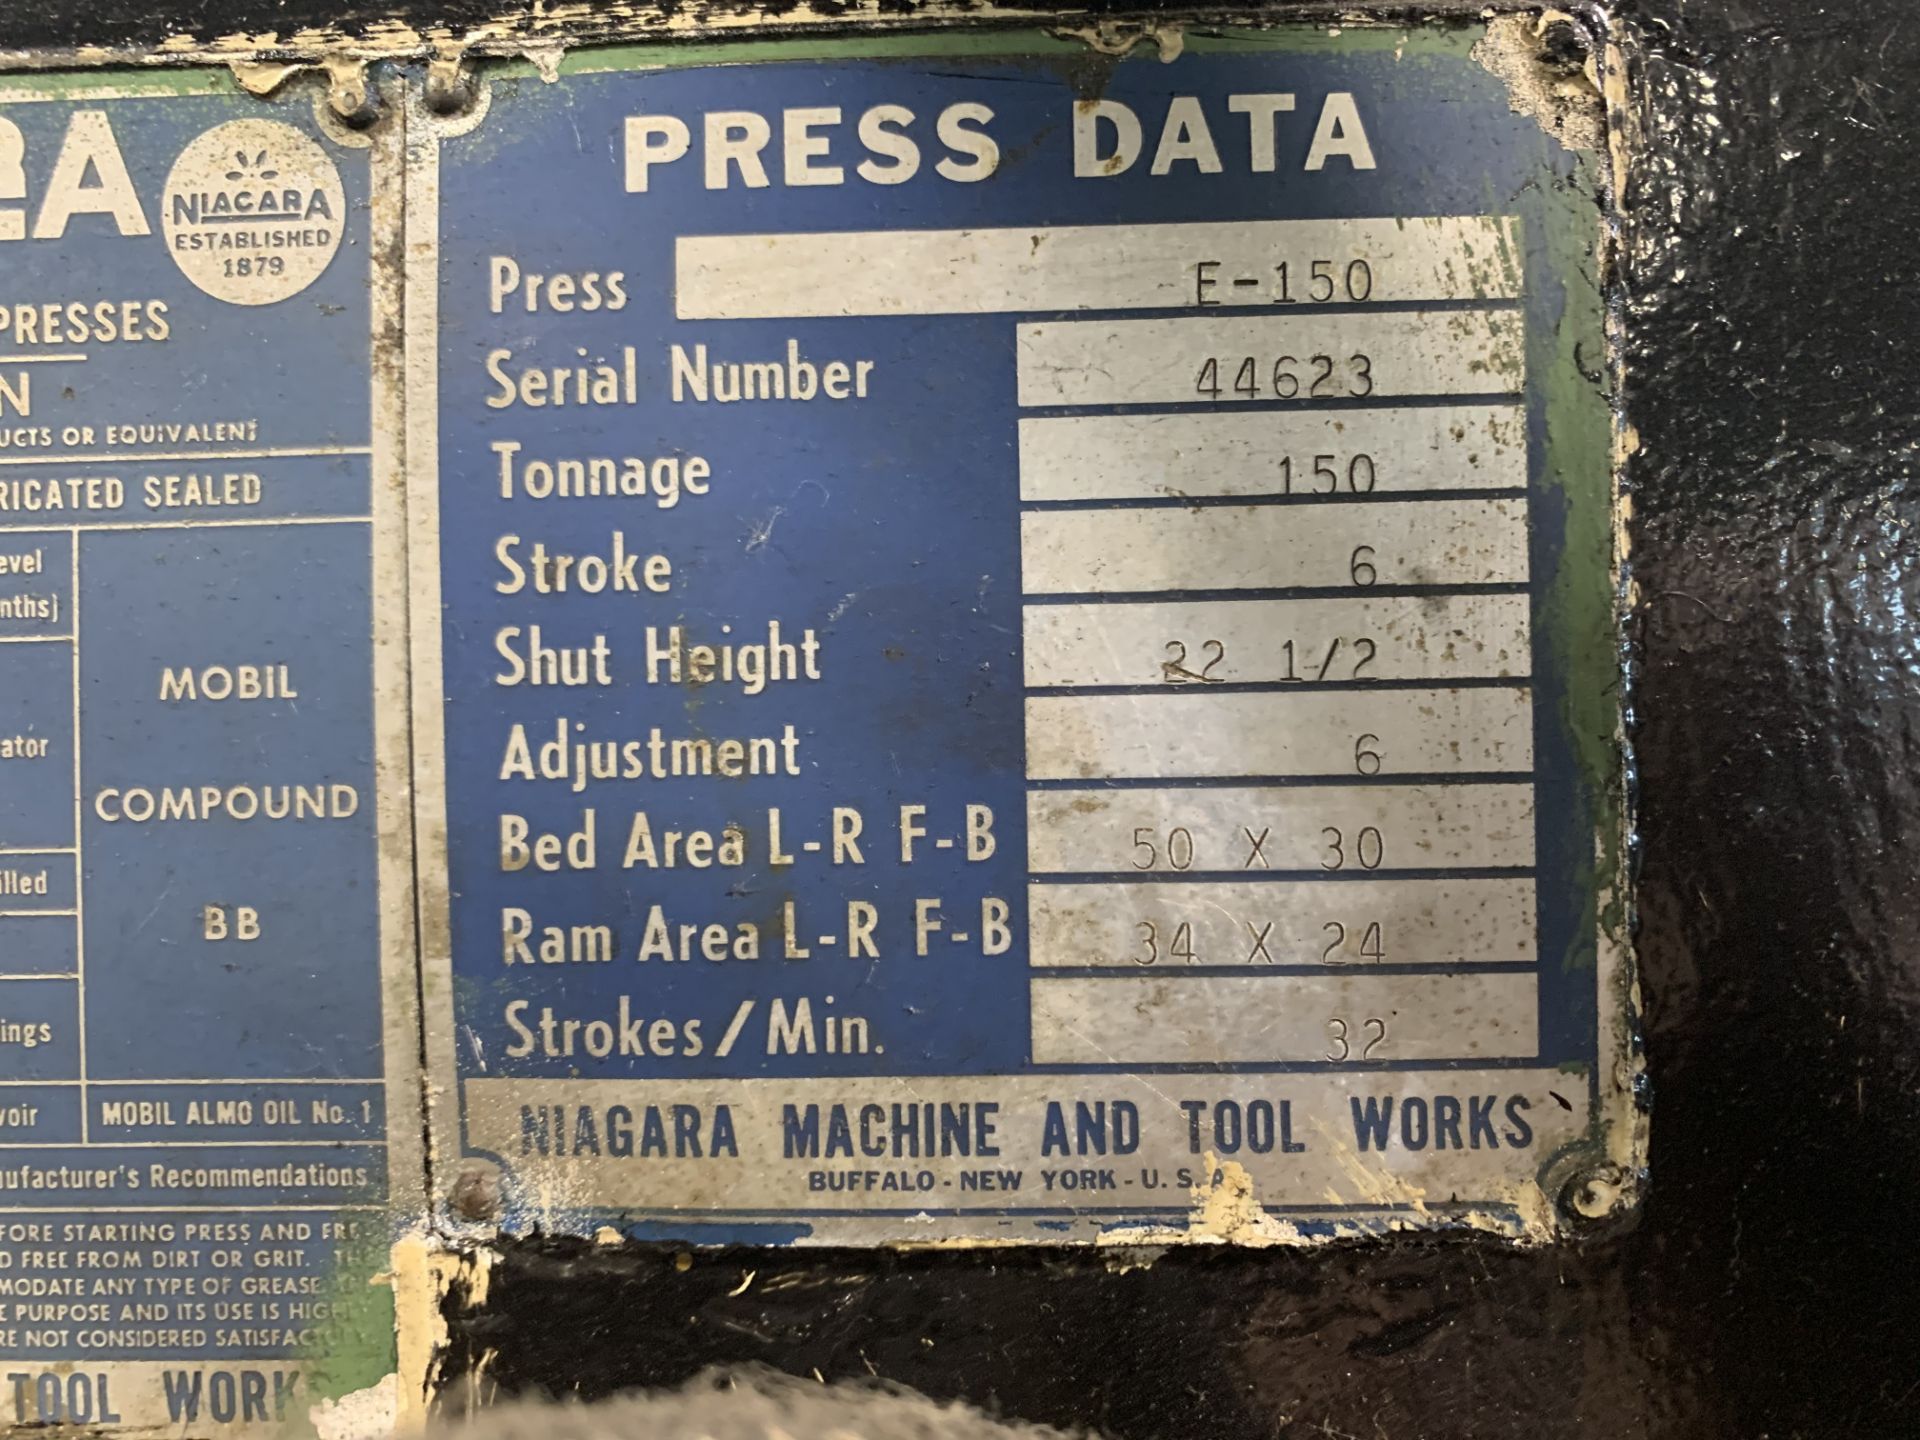 NIAGARA 150-TON OBI PRESS; MODEL F-150, S/N 44623, 6'' STROKE, 22 1/2'' SHUT HEIGHT, 6'' ADJUSTMENT, - Image 4 of 4